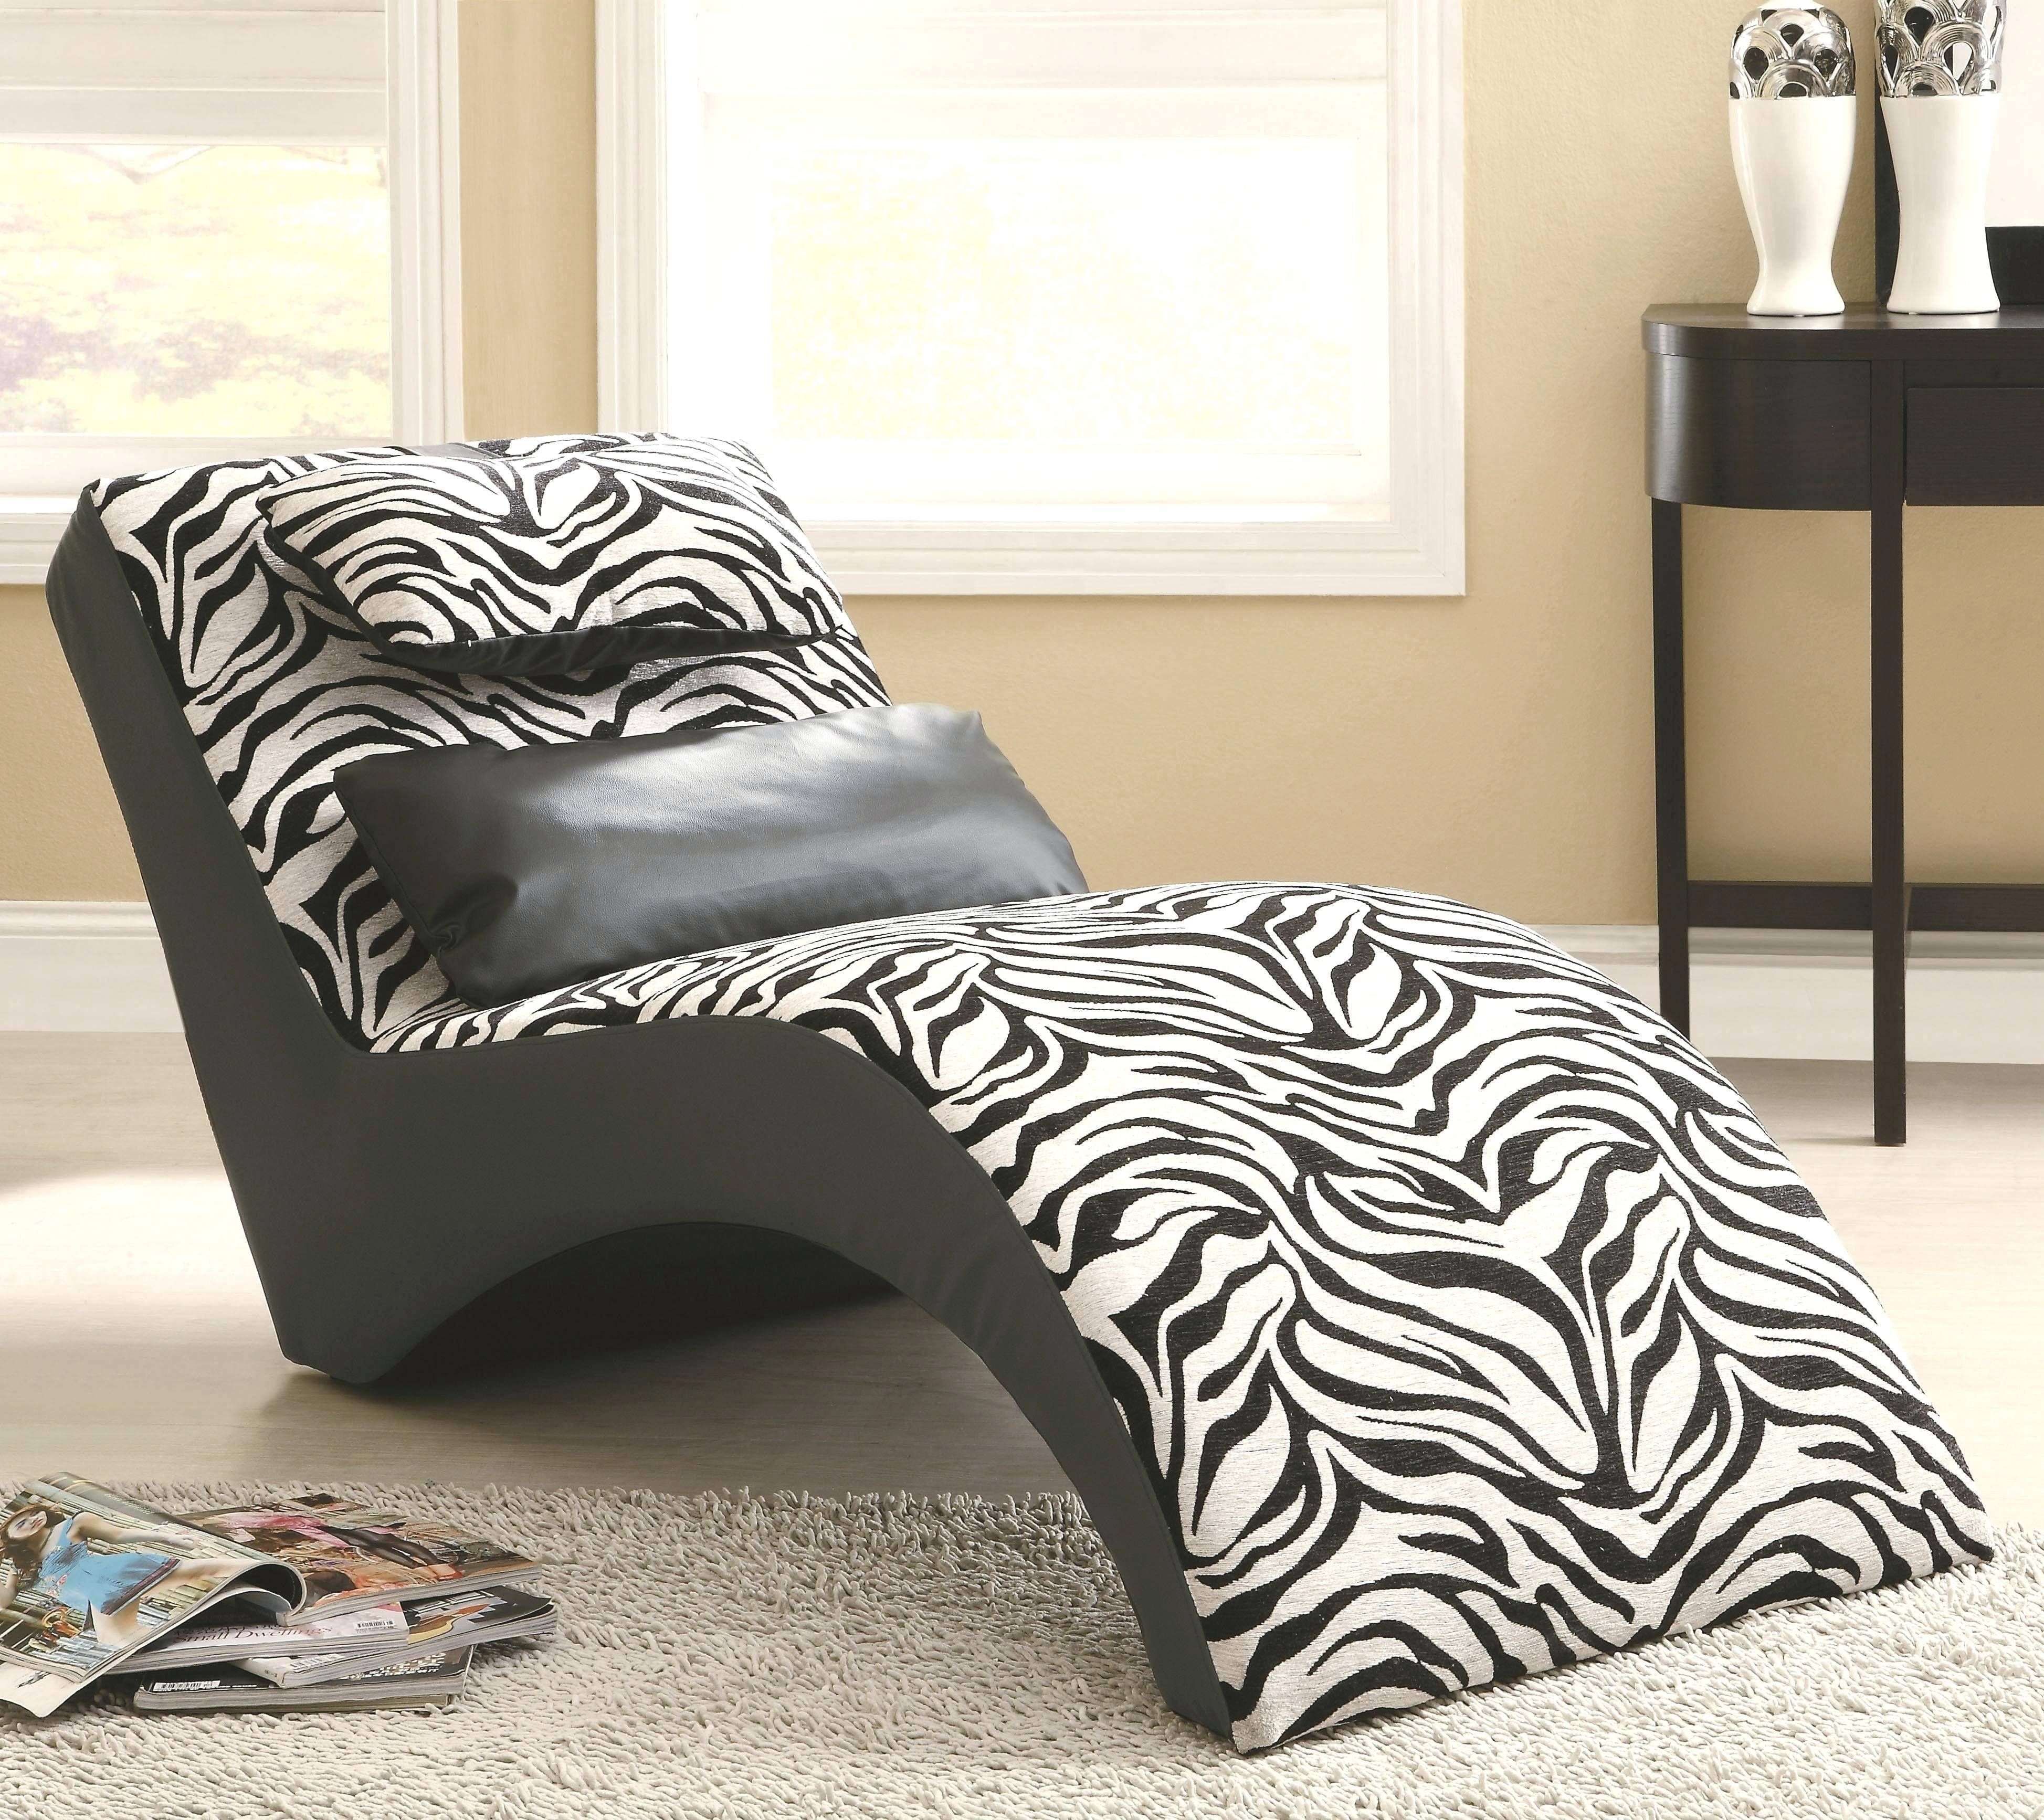 138 Charming Full Size Of Sofas Centeranimal Print Sofa Amazing For Animal Print Sofas (Photo 12 of 15)